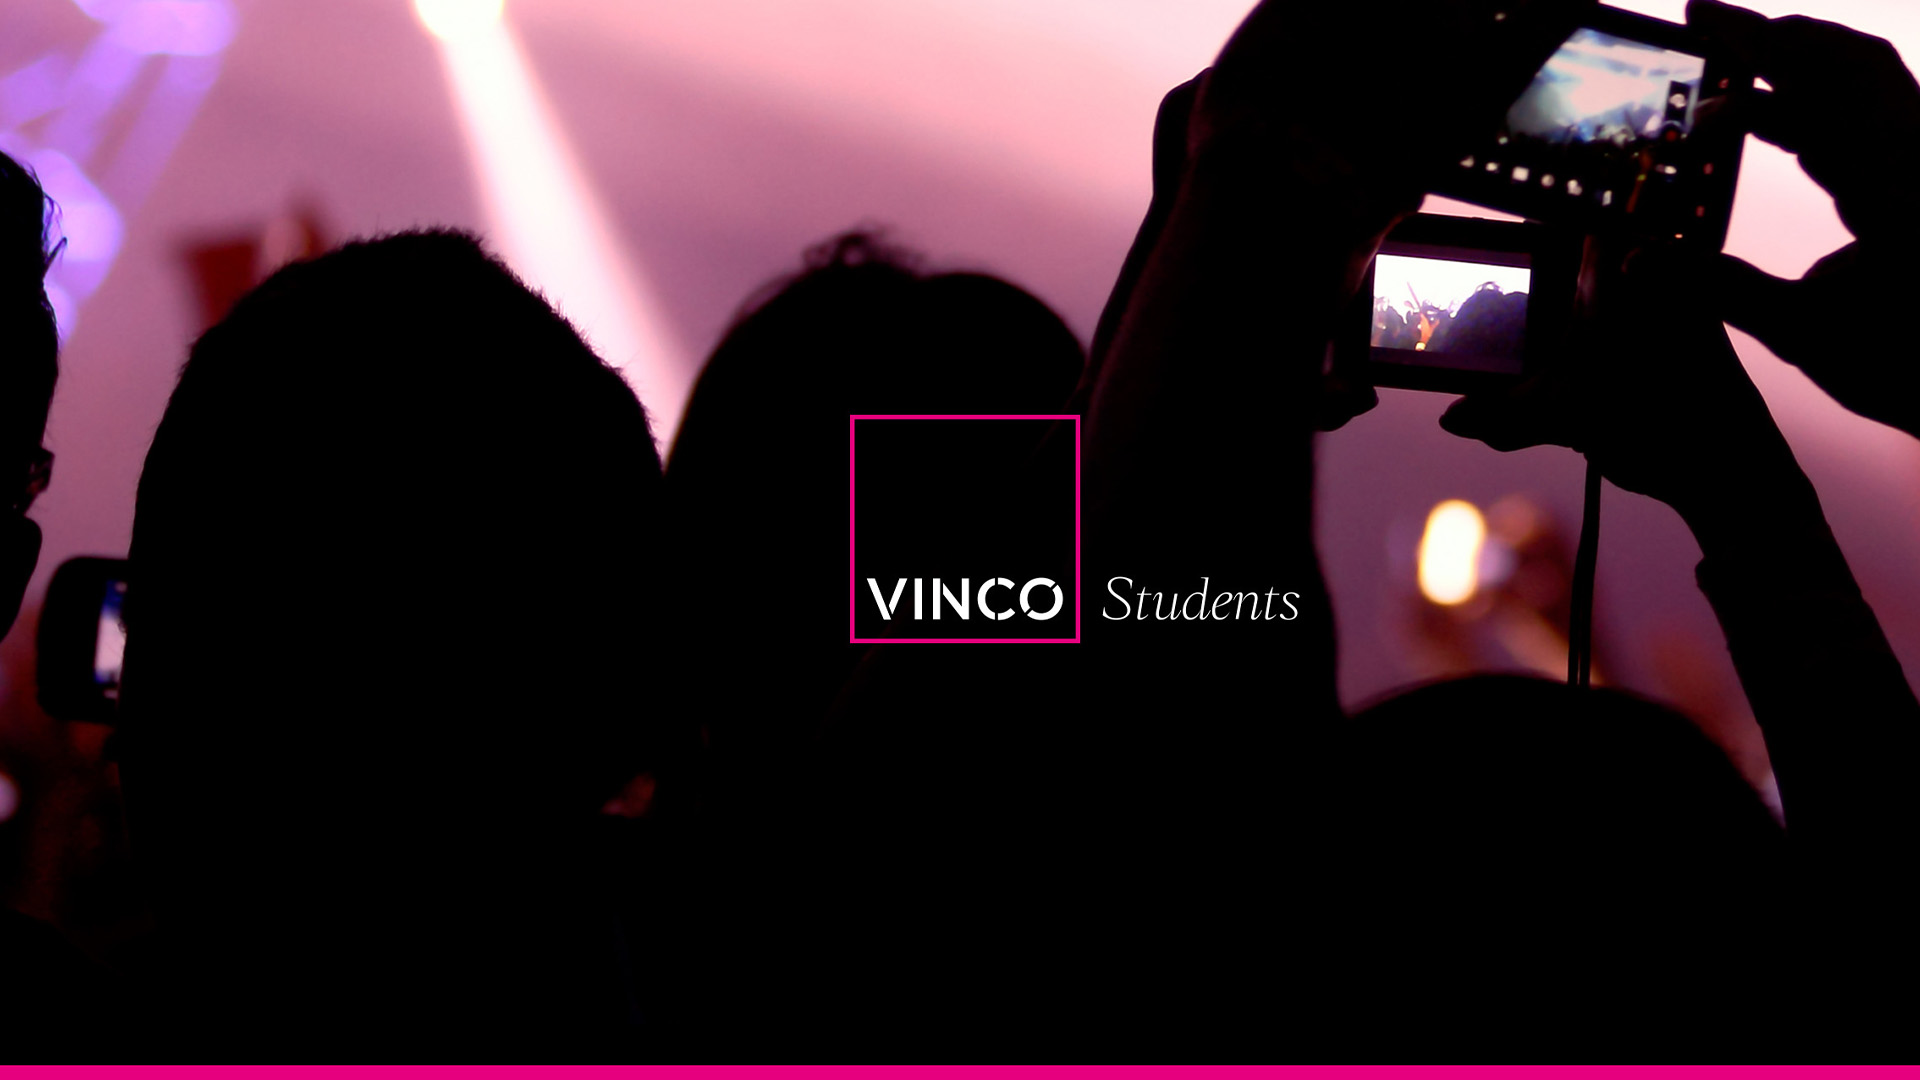 Vinco-students-1920×1080-1